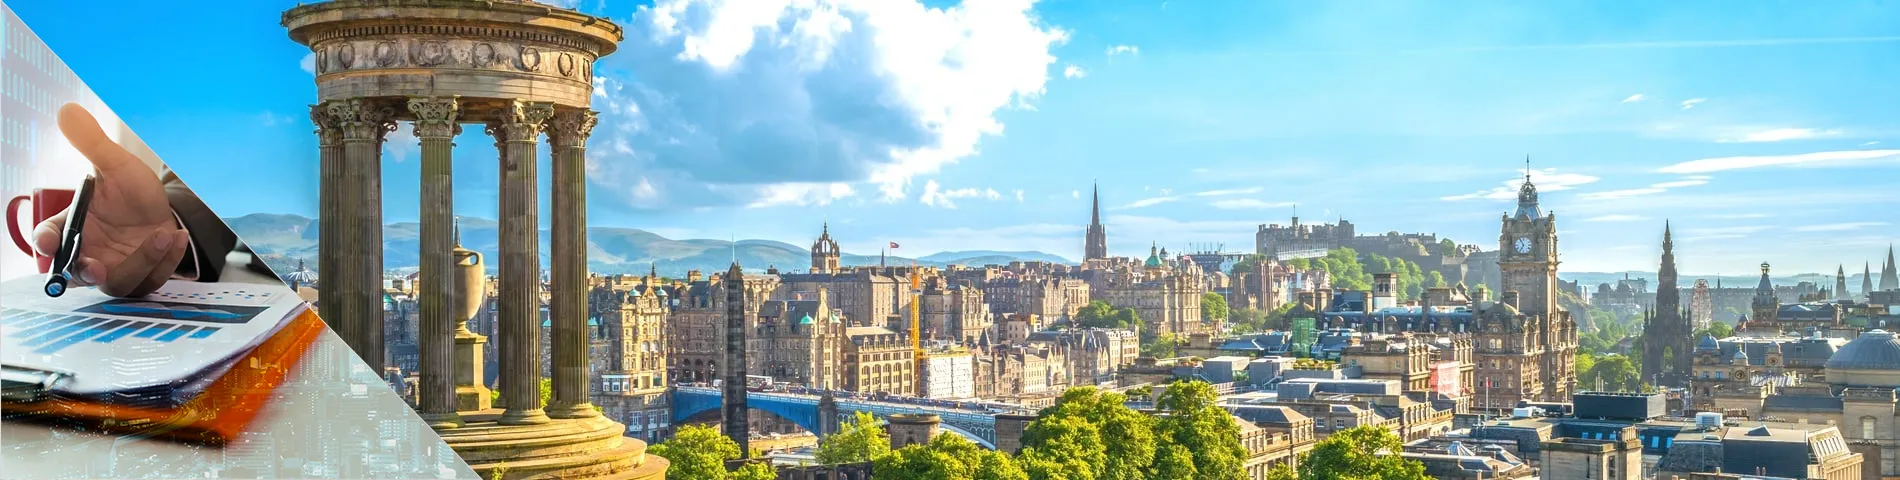 Edinburgh - Banking & Finance